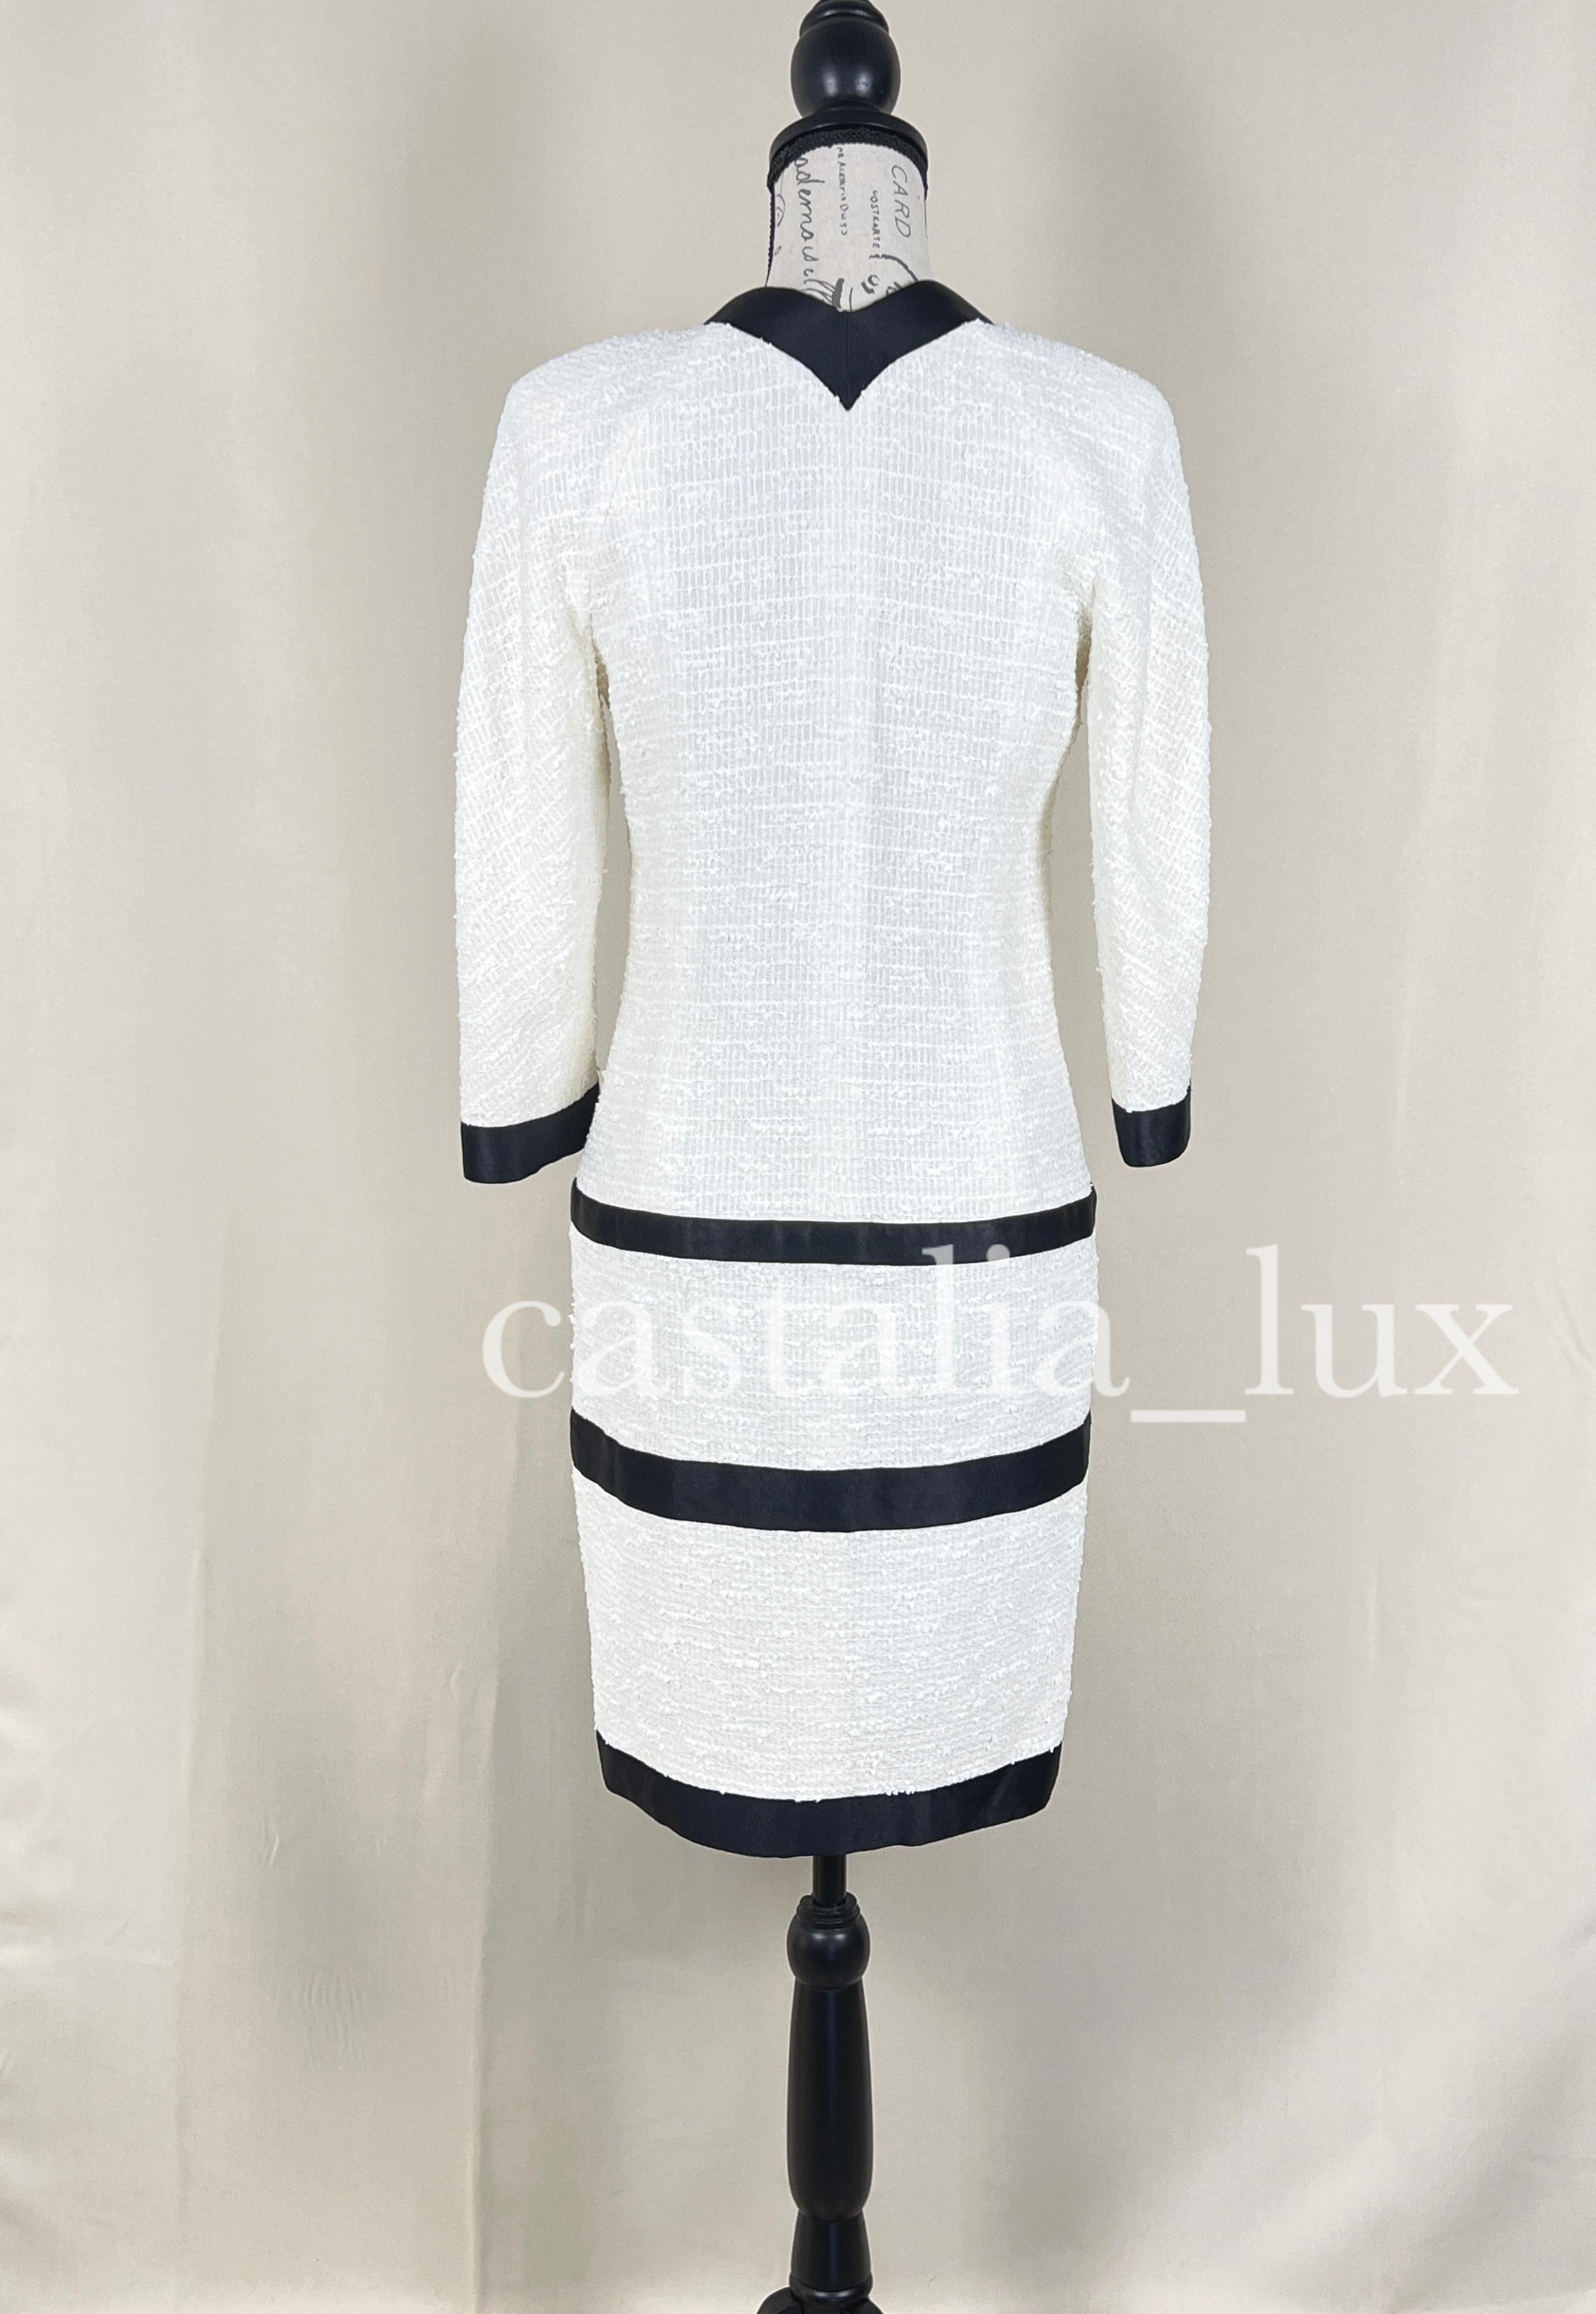 Chanel Claudia Schiffer Paris / Miami Iconic Dress 12